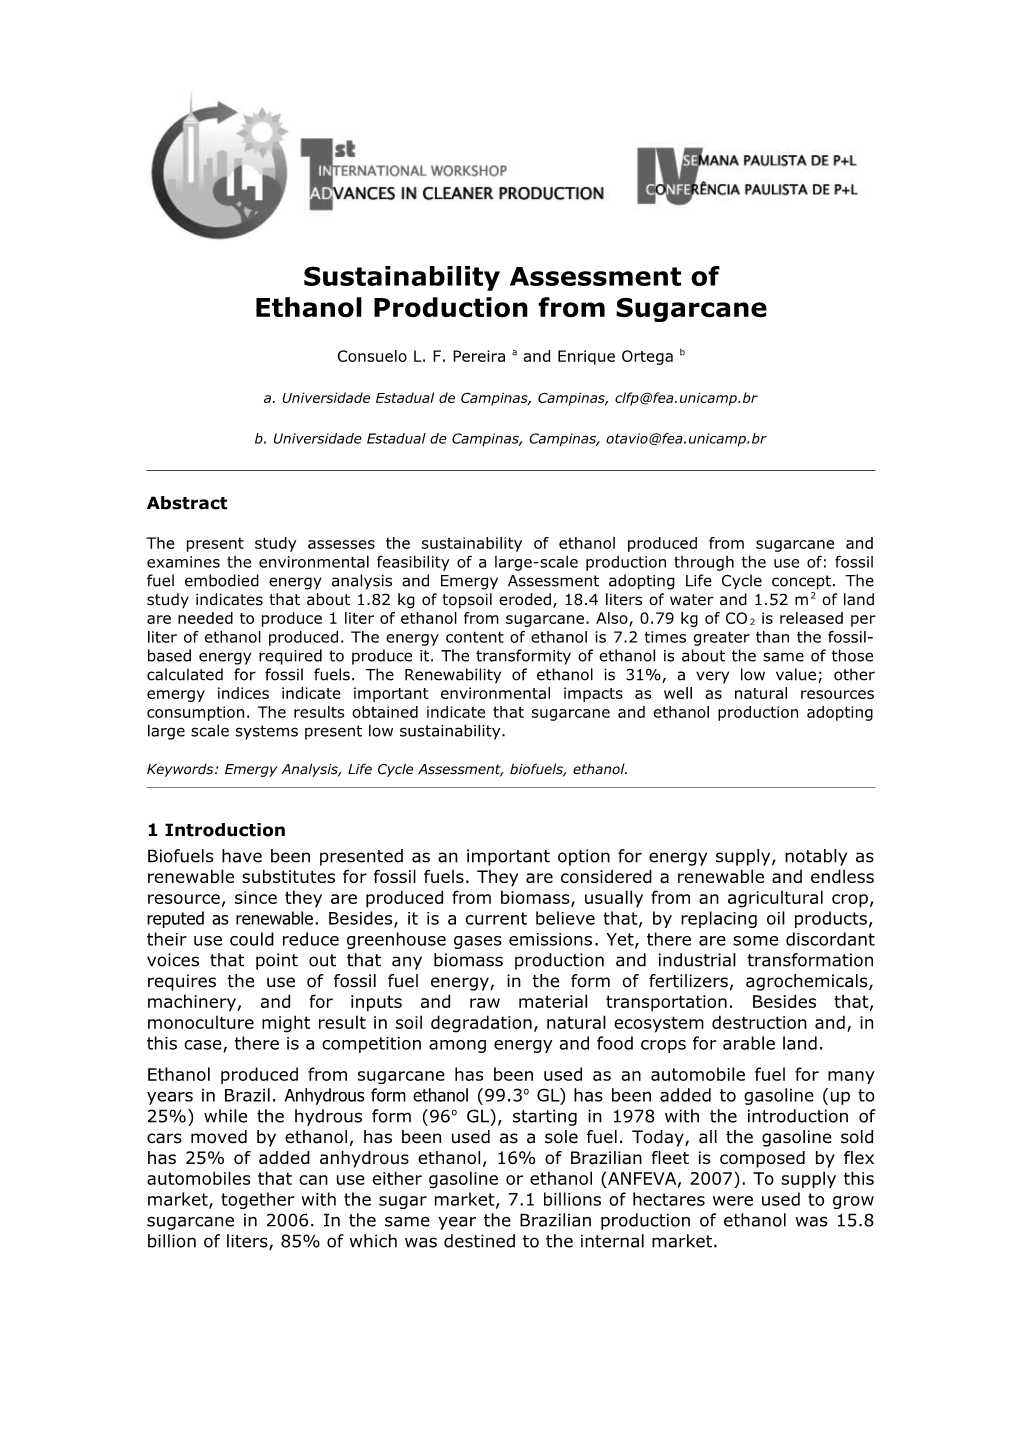 Sustainability Assessment of Ethanol Production from Sugarcane